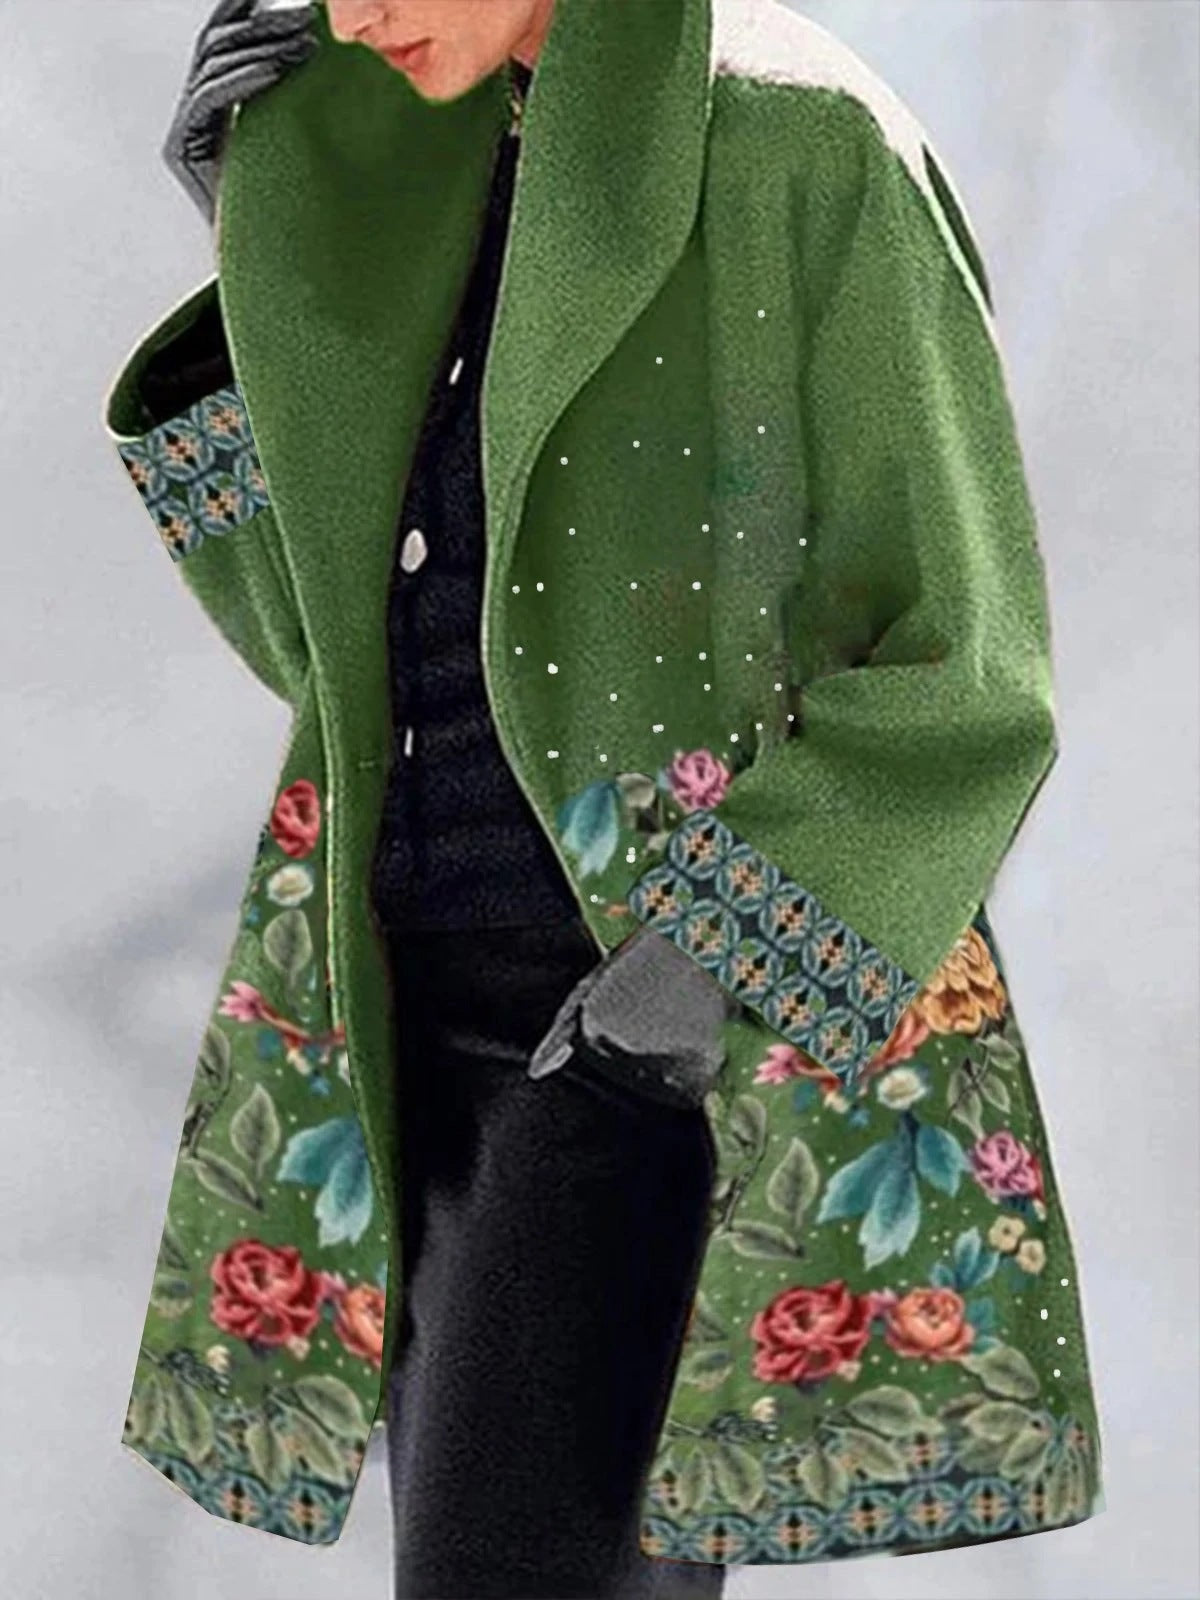 Océane Dubois® | Classy en stijlvolle lange jas